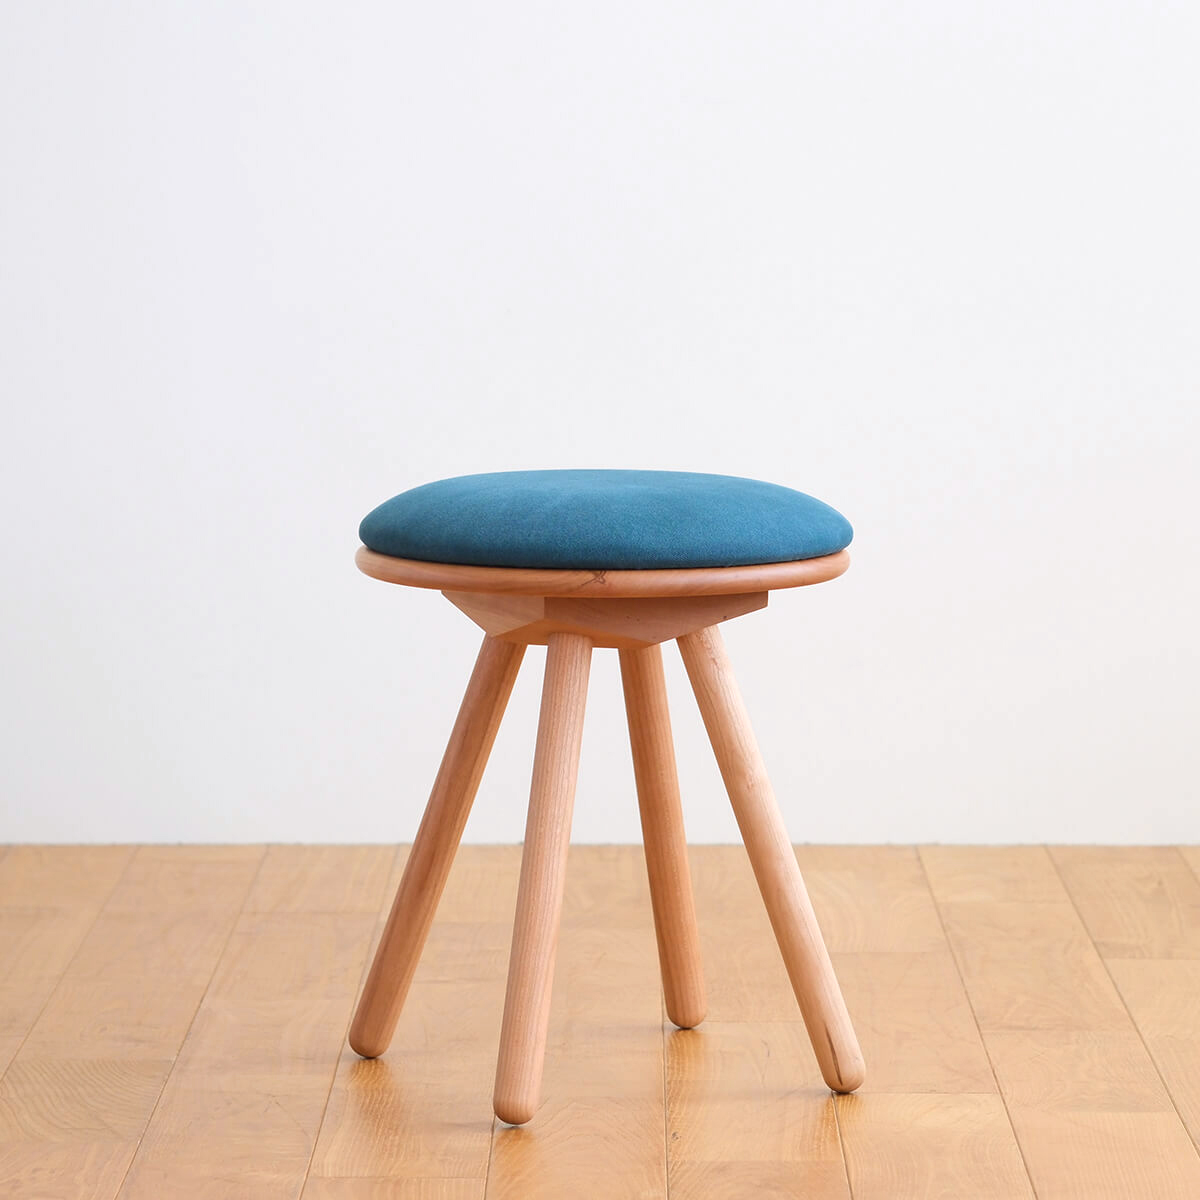 ES Circle stool